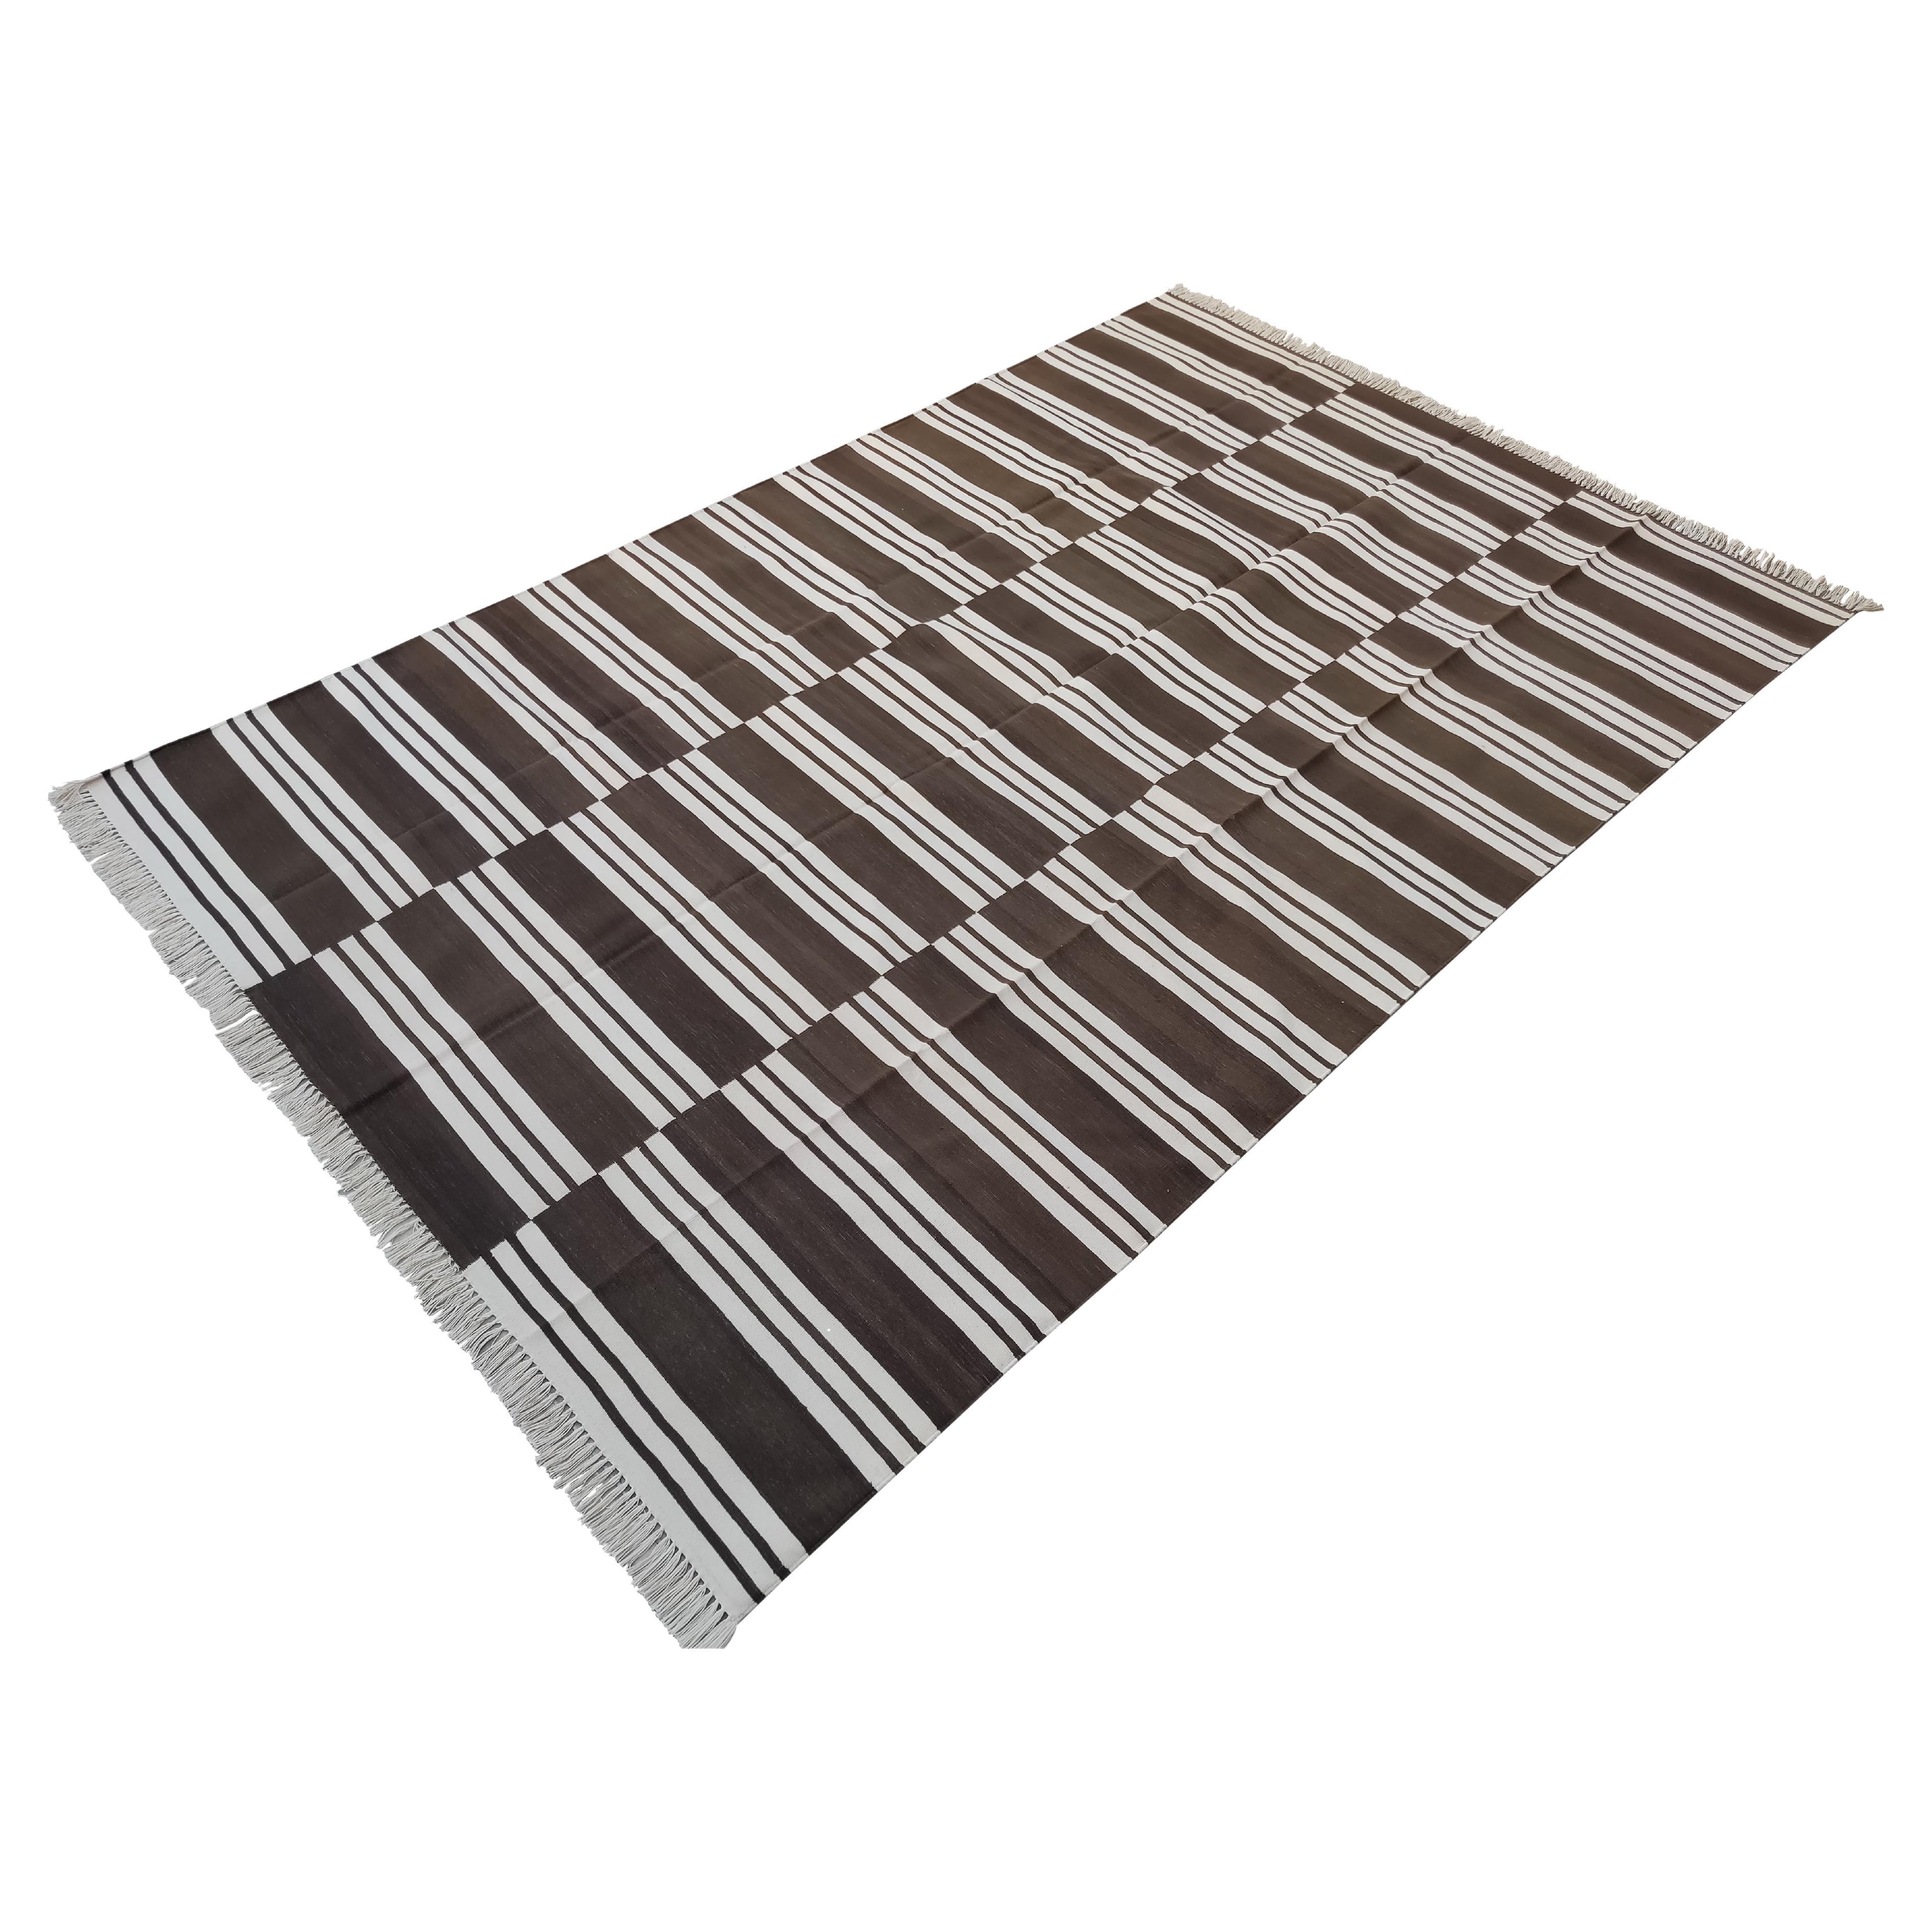 Handgefertigter Flachgewebe-Teppich aus Baumwolle, 6x9 Brown and White Striped Indian Dhurrie